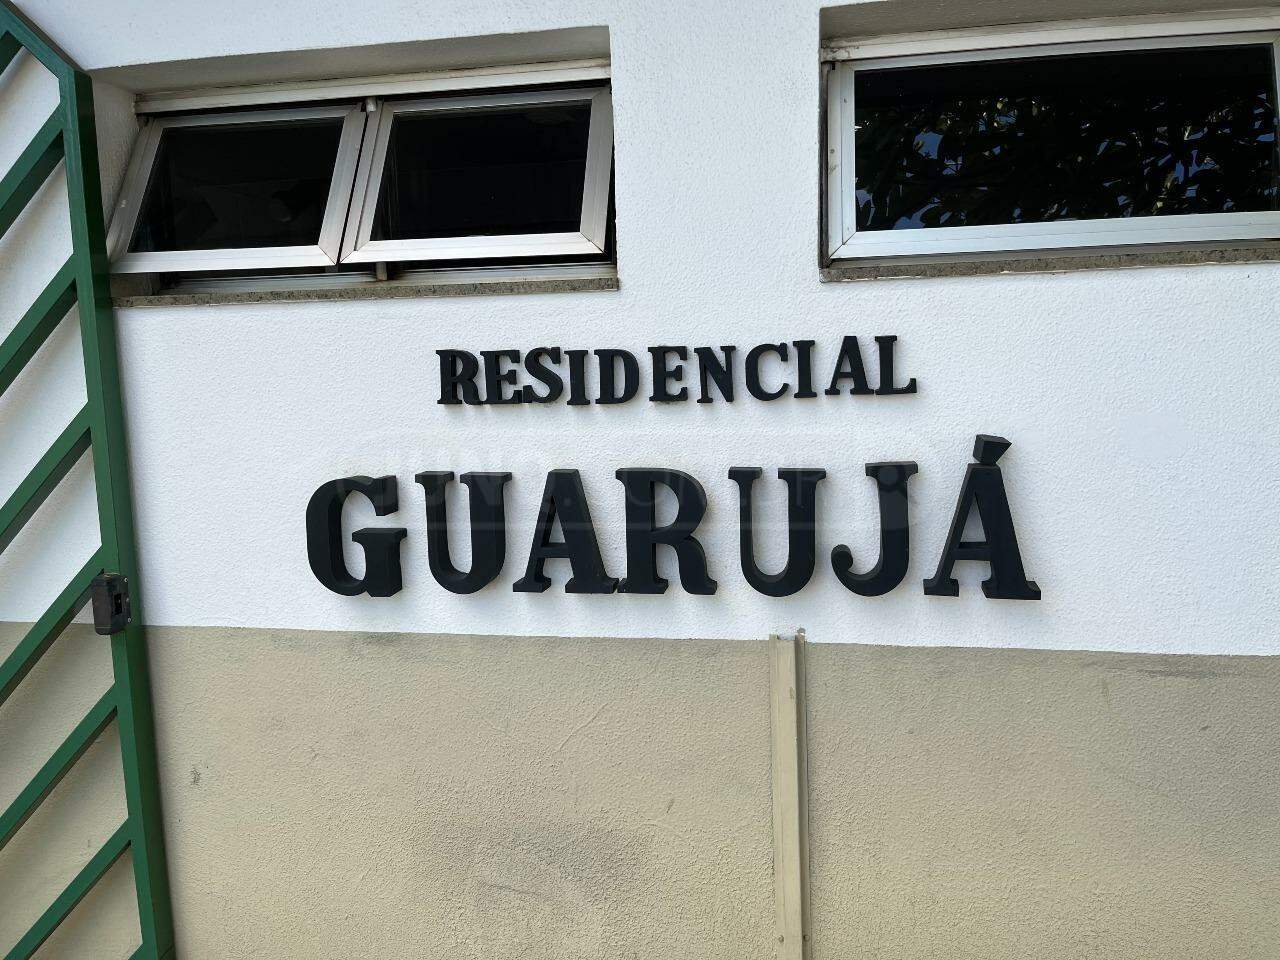 Residencial Guarujá